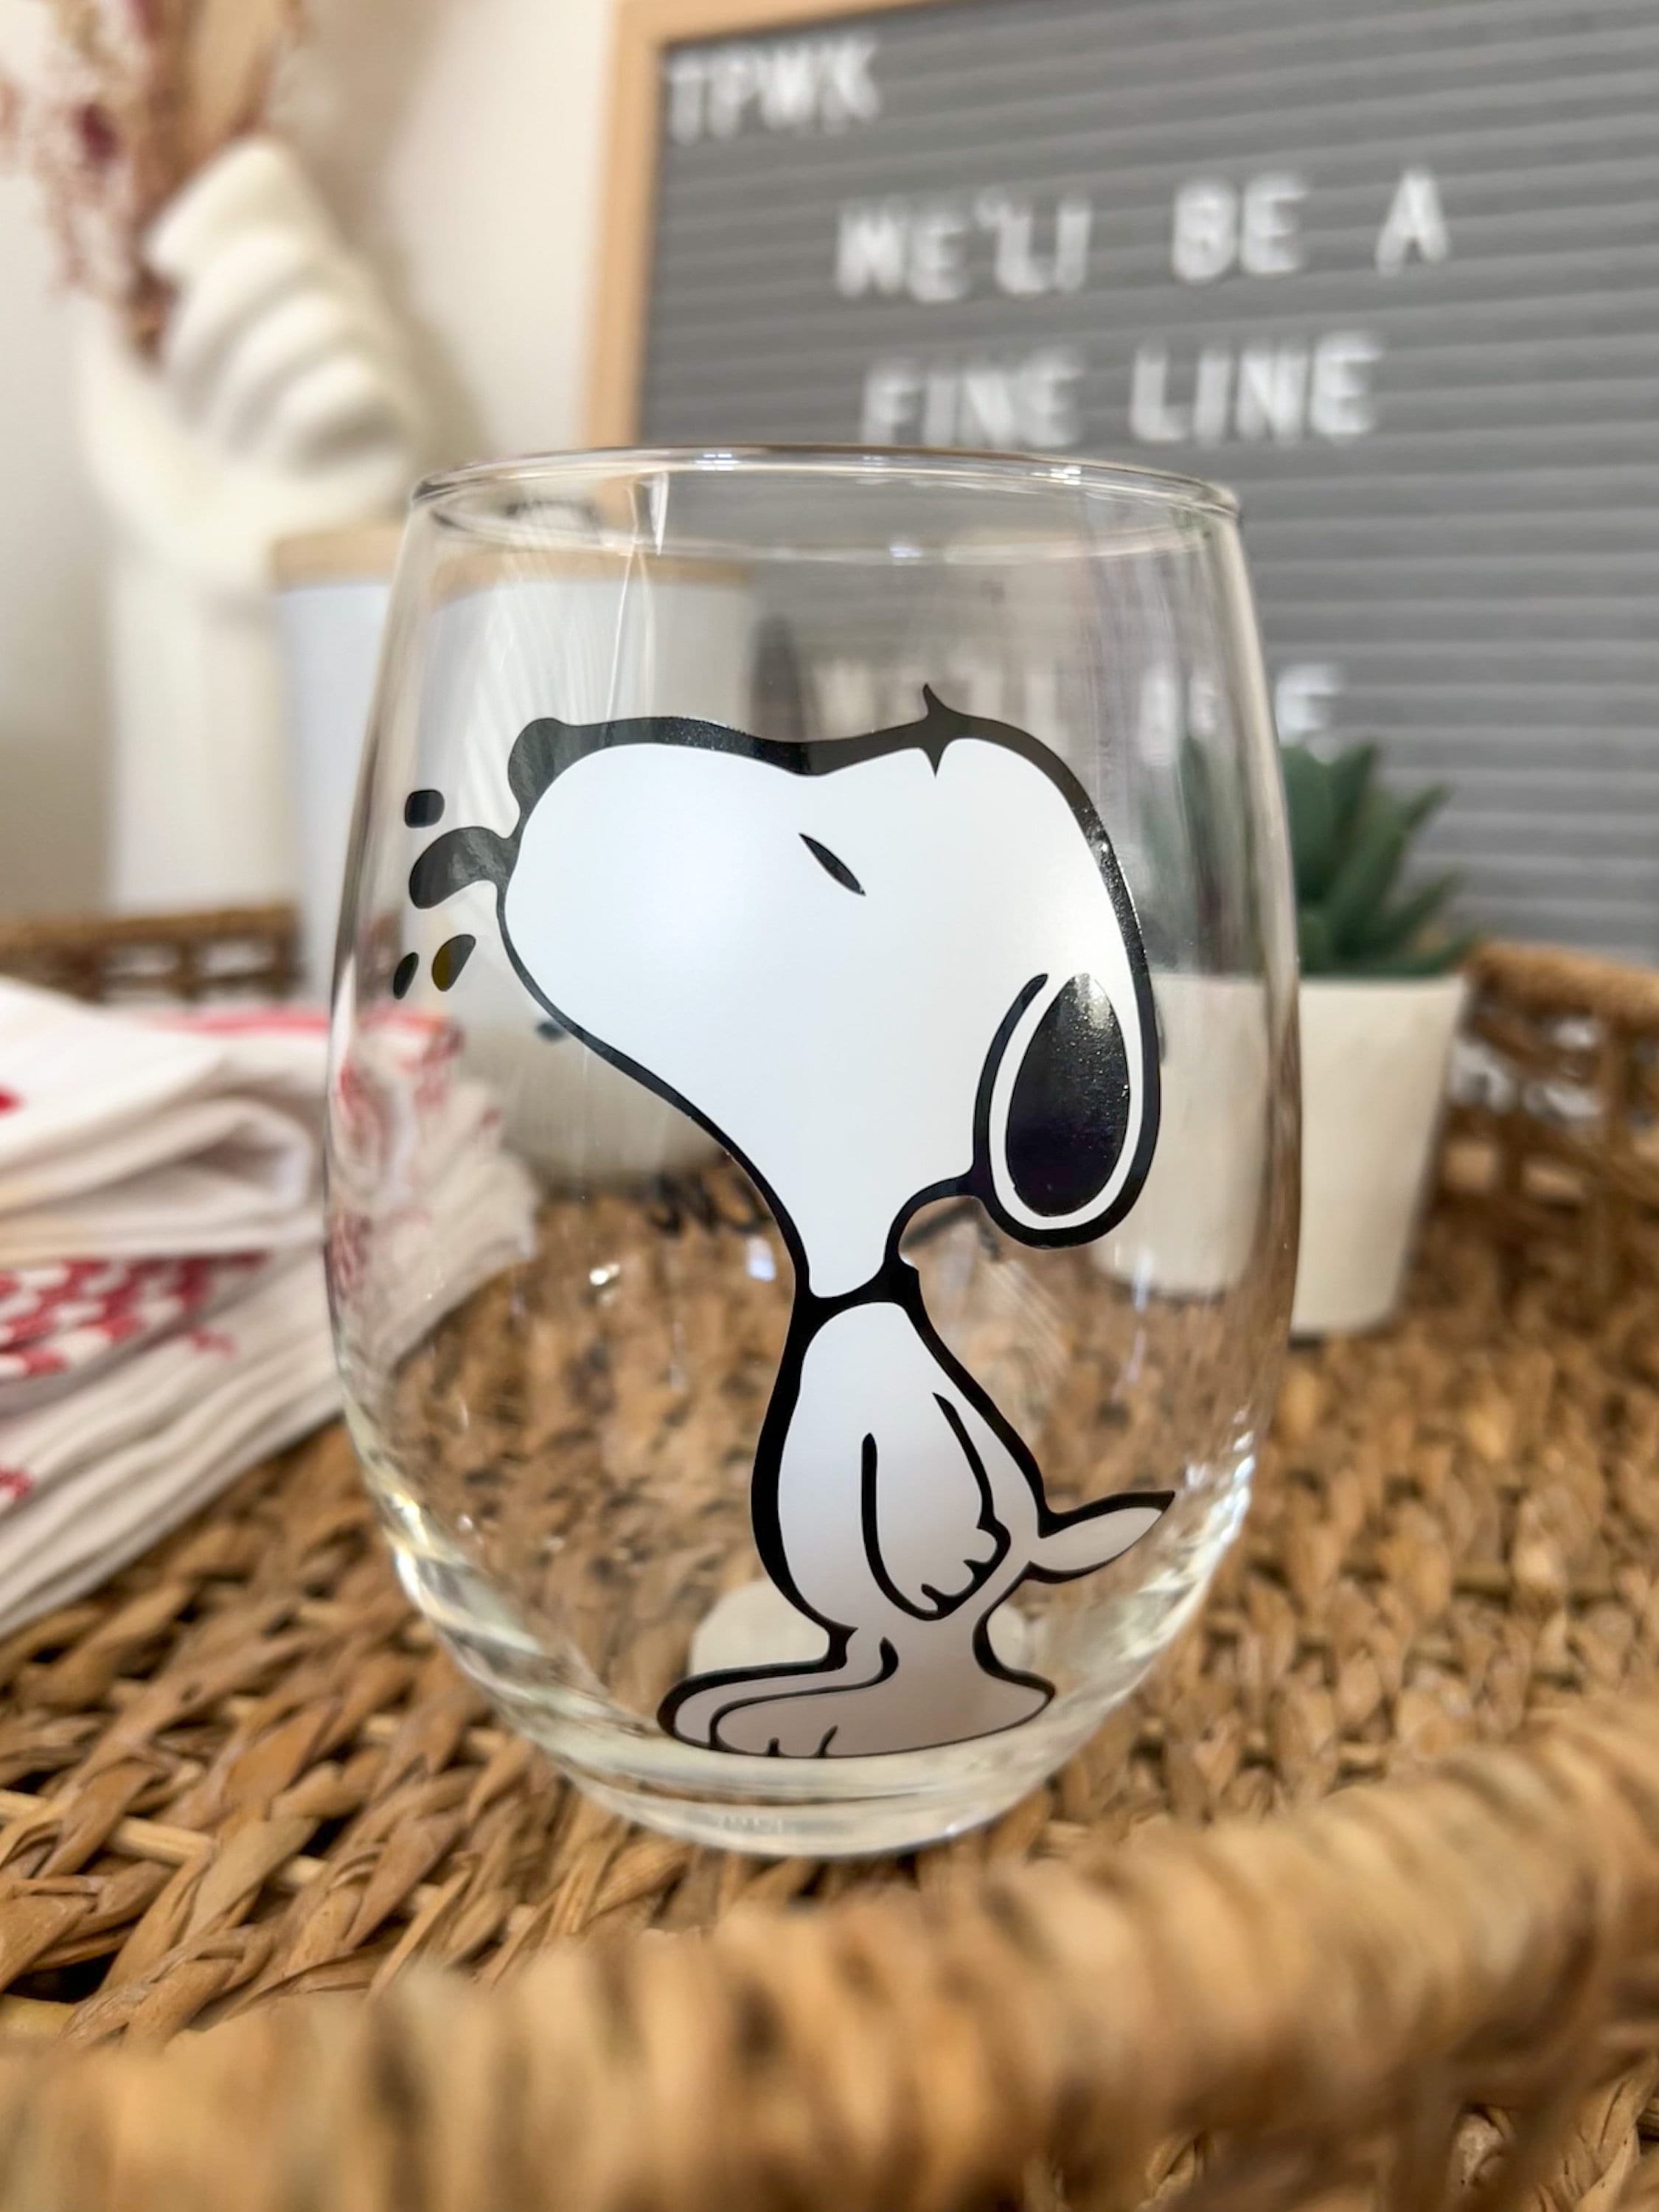 Snoopy Love 20 OZ Stemless Wine Glass